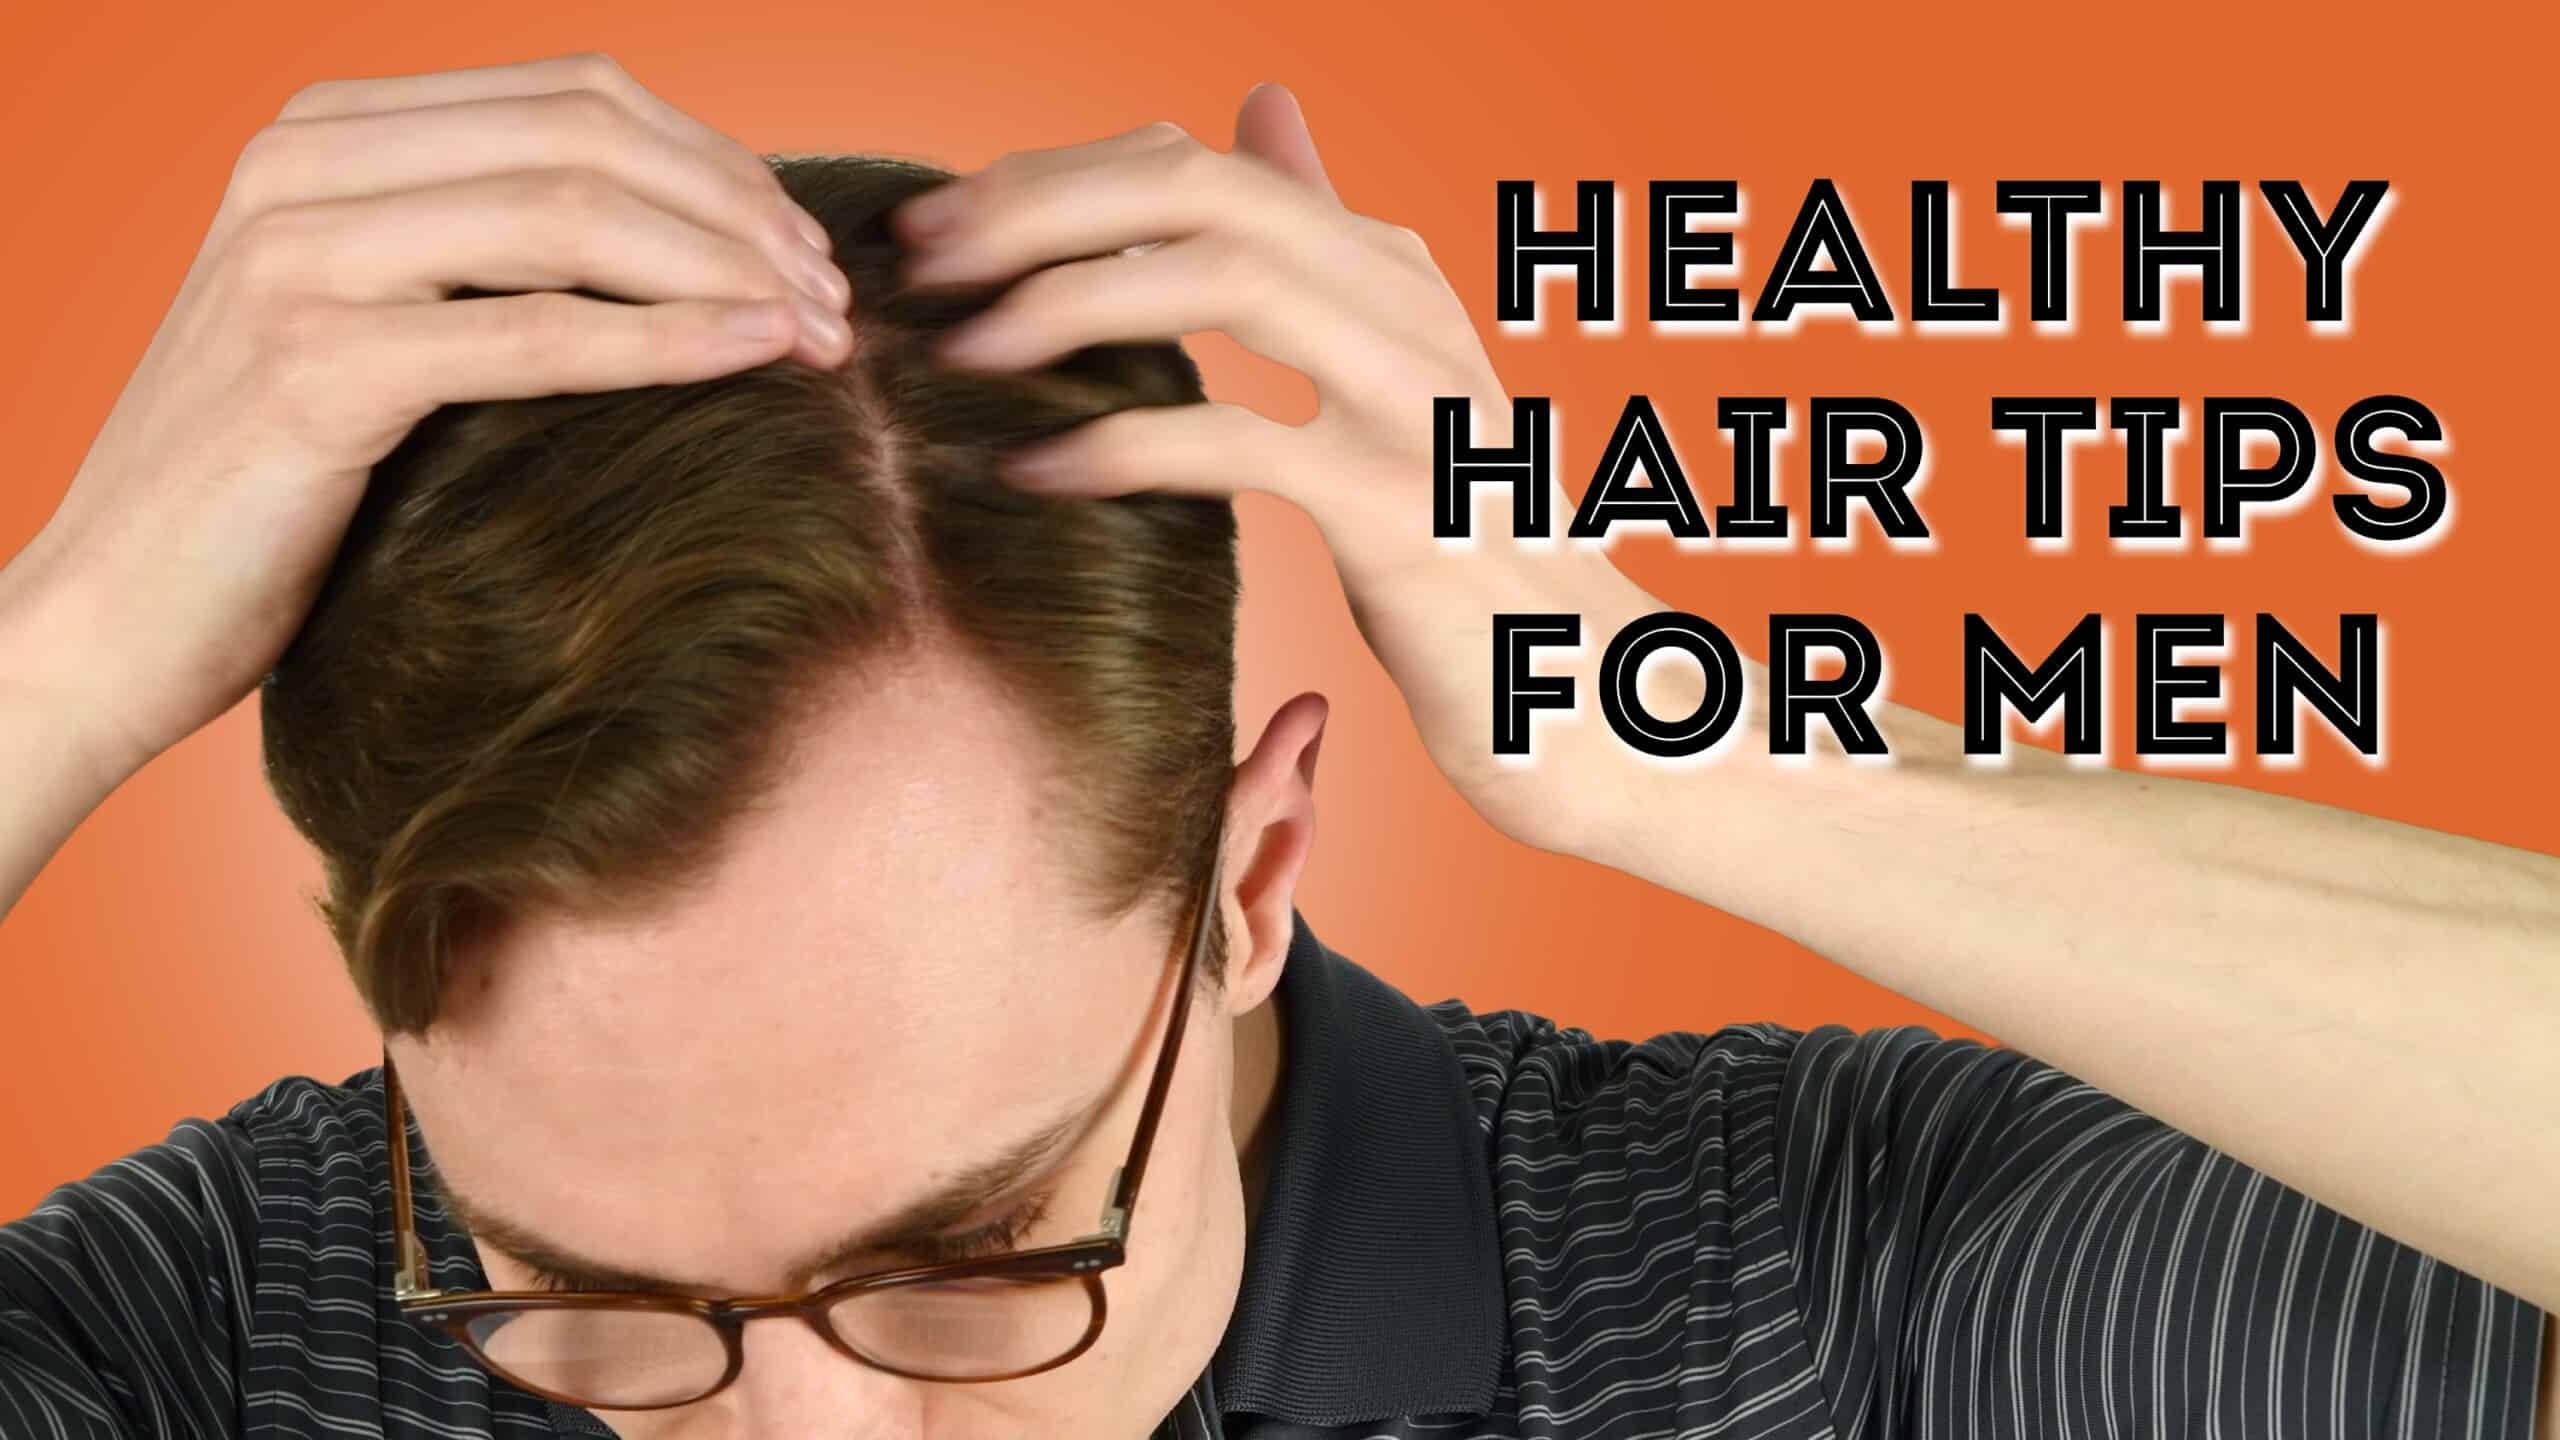 15 Healthy Hair Tips For Men